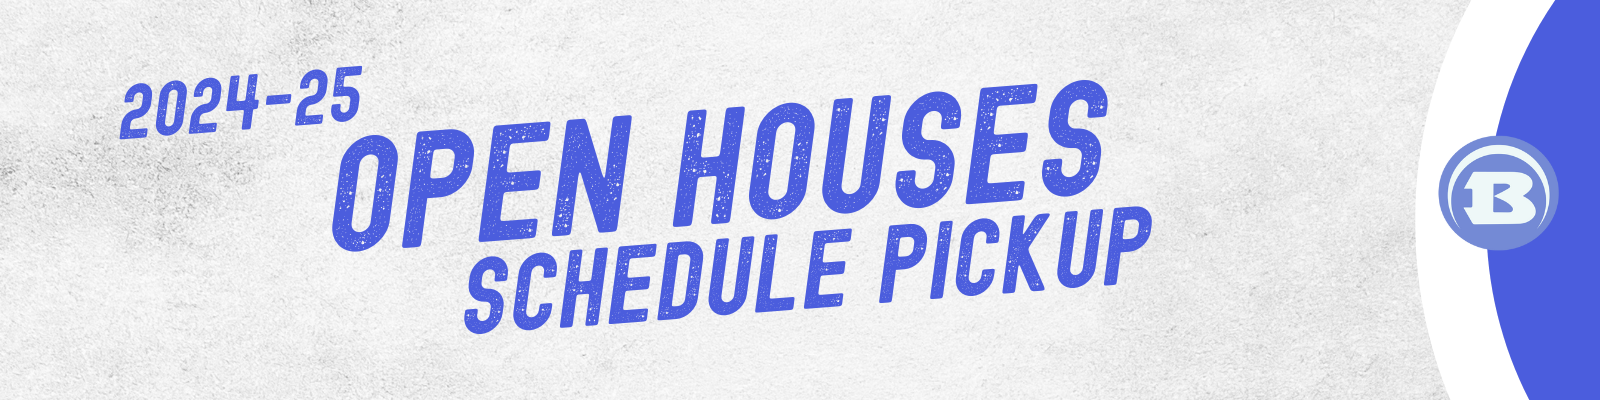 Open House Schedule Pickup